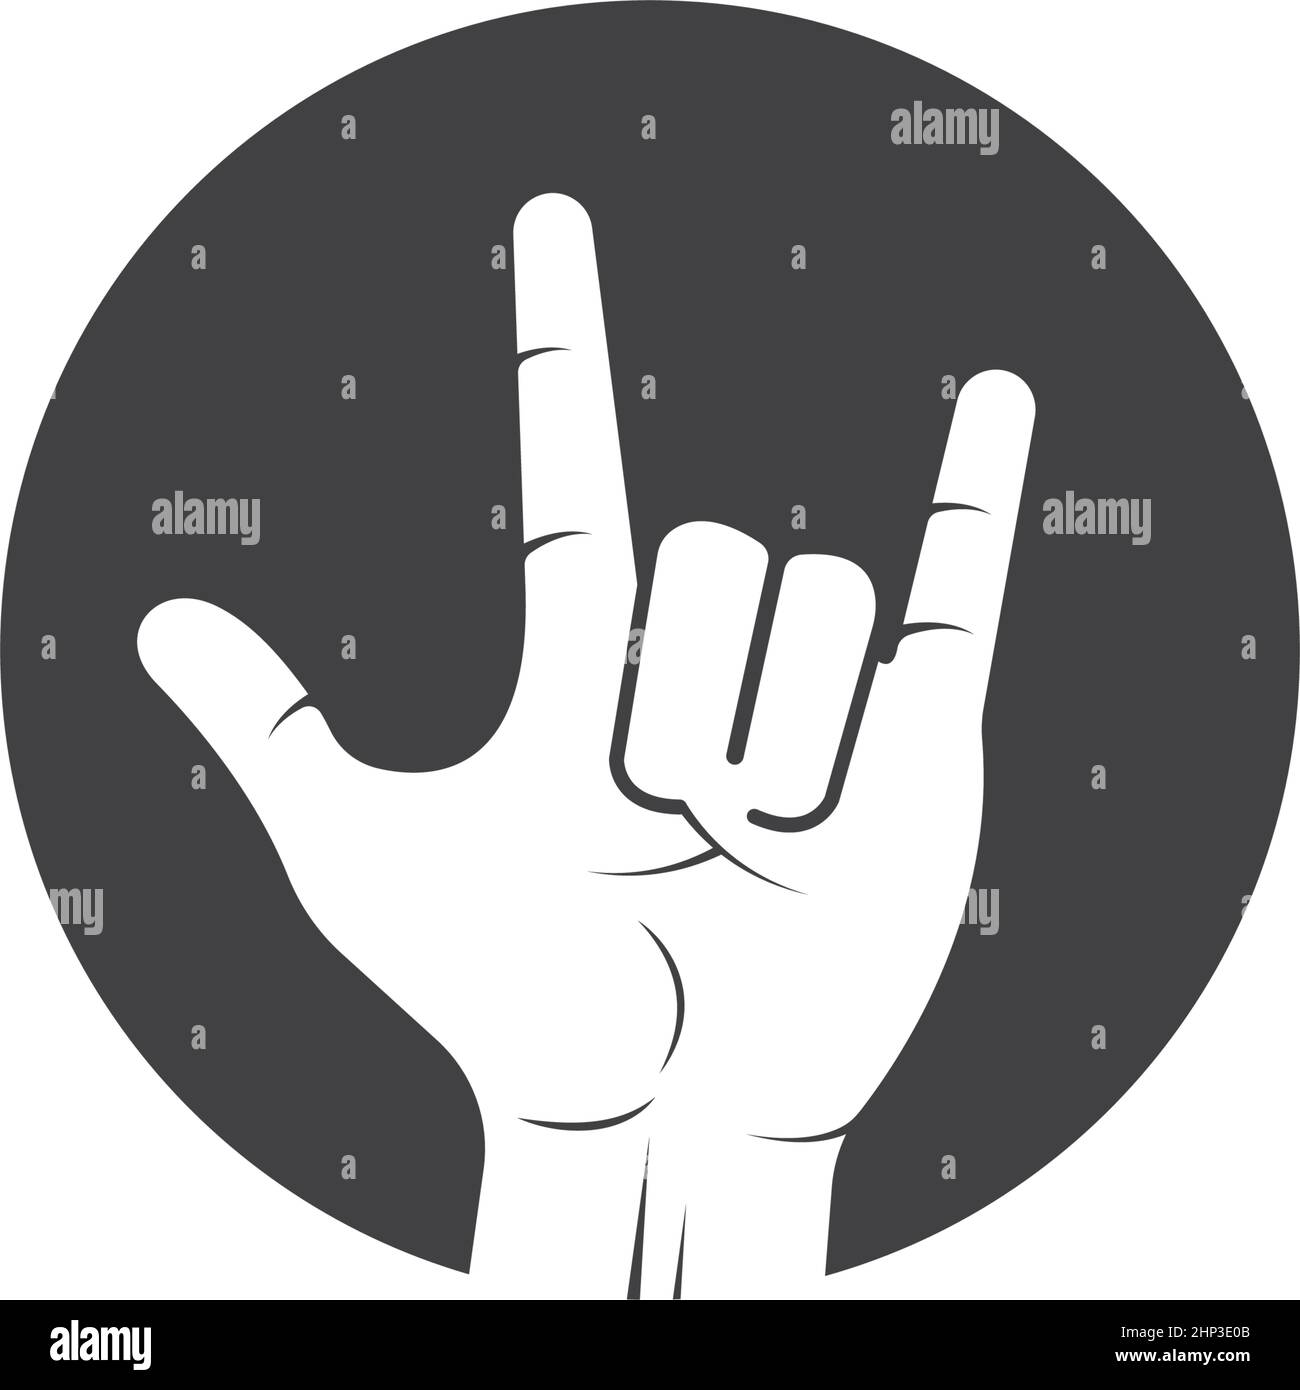 metal hand gesture icon vector illustration design template Stock Vector